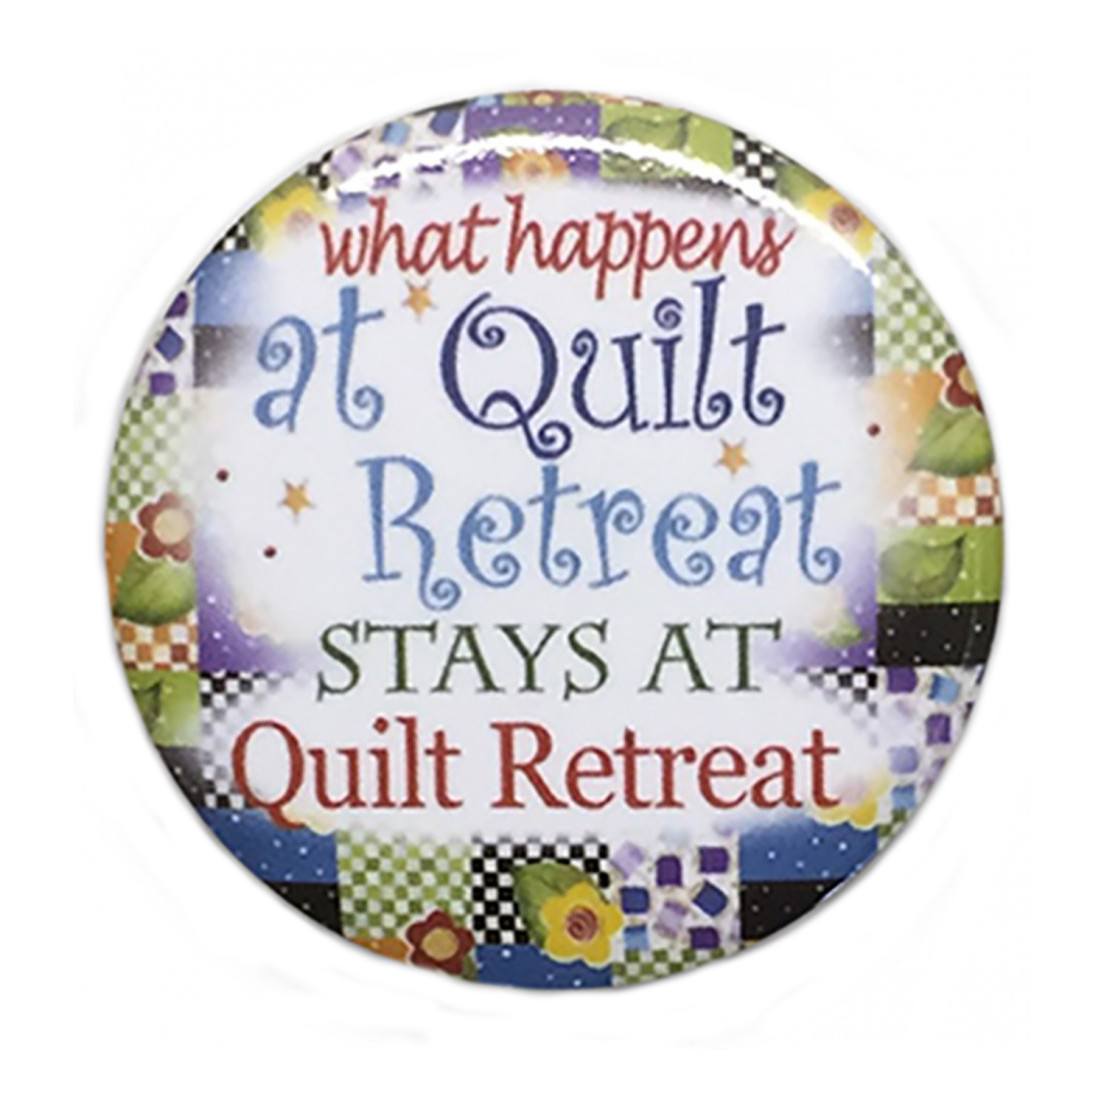 What Happens at Quilt Retreat Button image # 45329